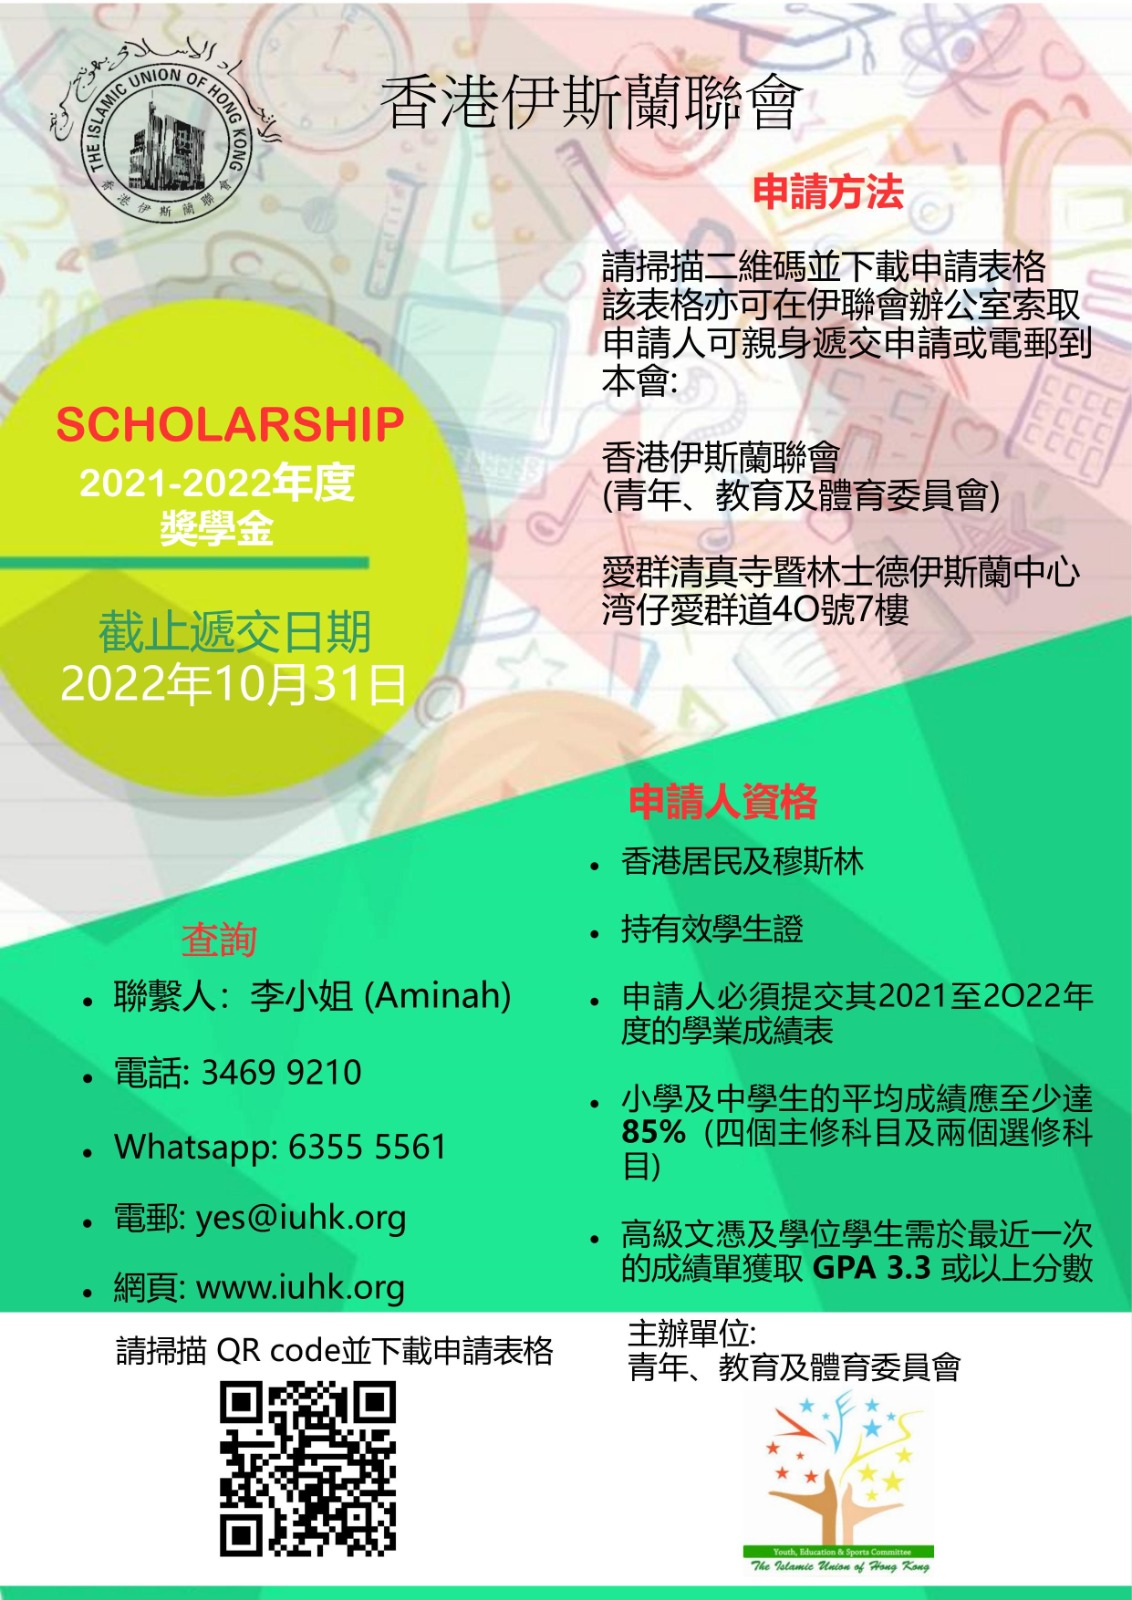 Scholarship Application 2022 c